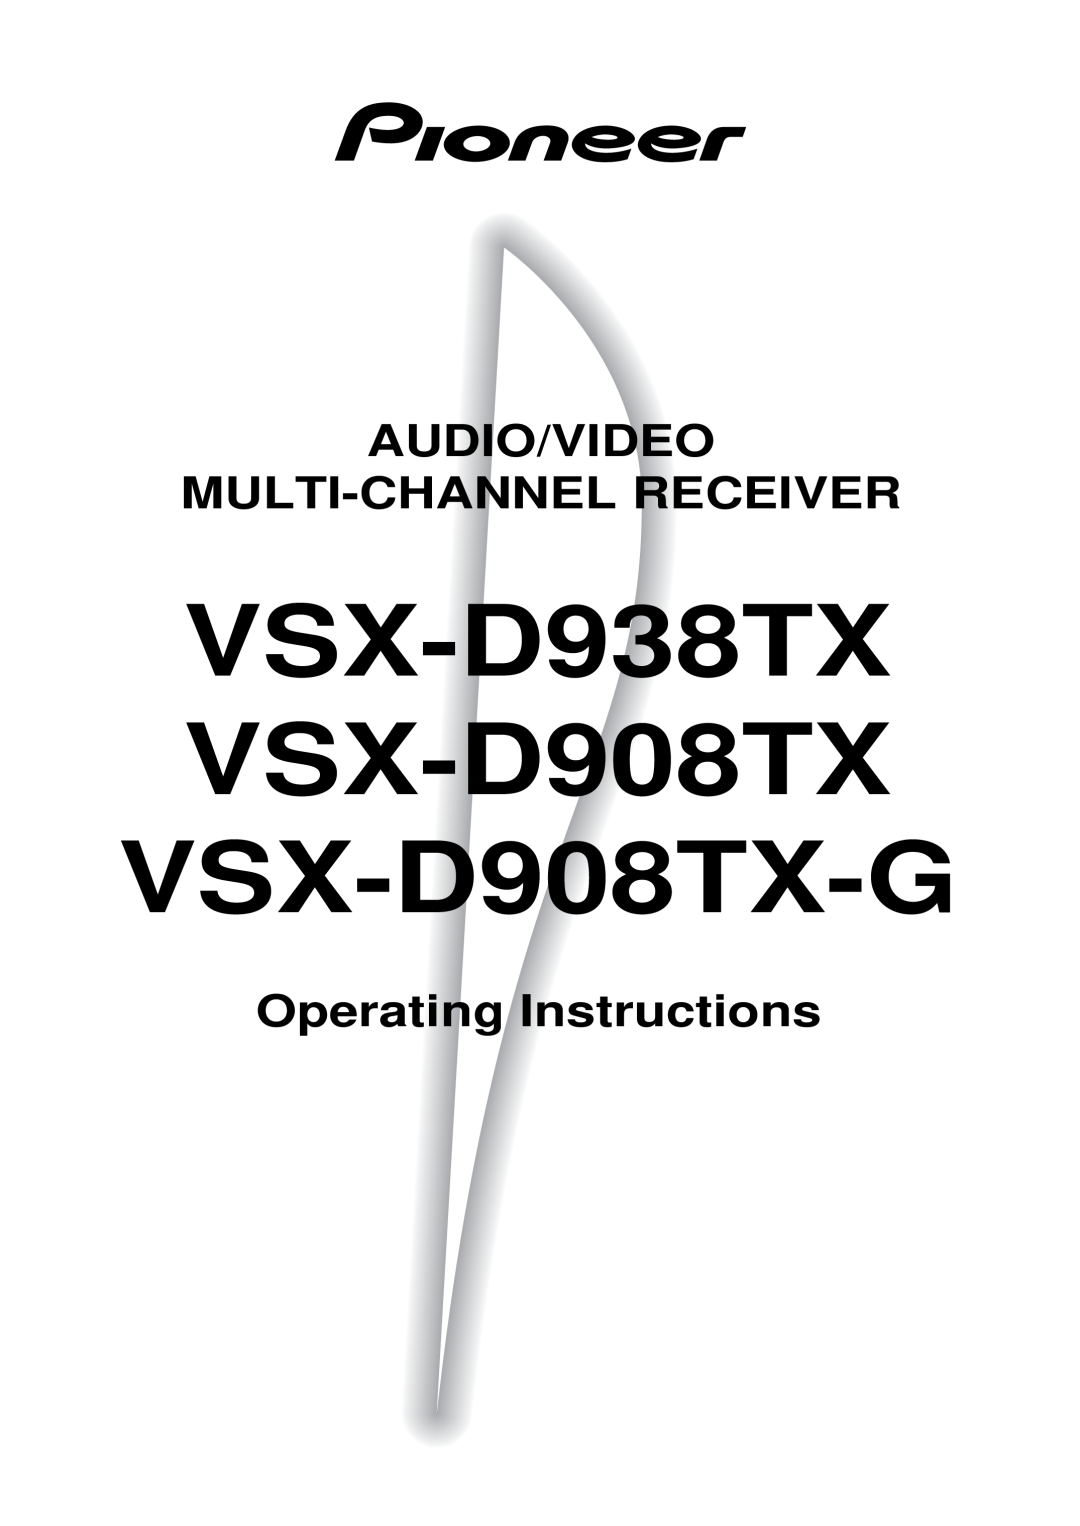 Pioneer manual VSX-D938TX VSX-D908TX VSX-D908TX-G, Audio/Video Multi-Channelreceiver, Operating Instructions 